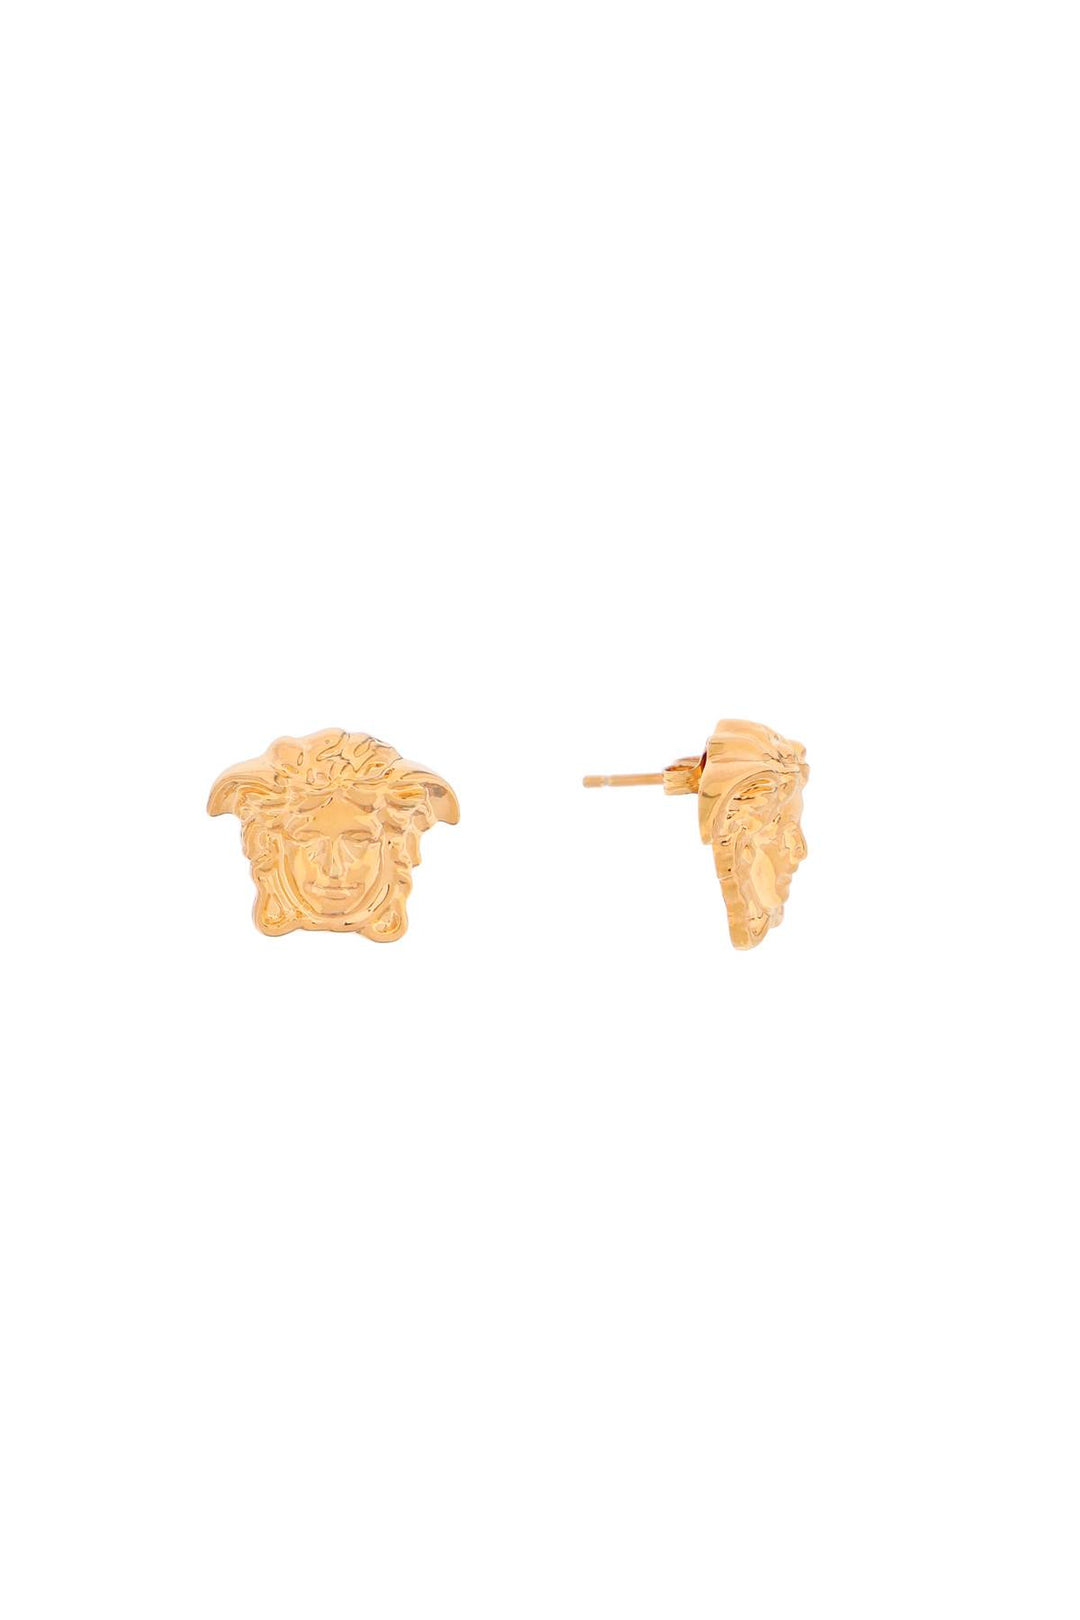 medusa head earrings-0